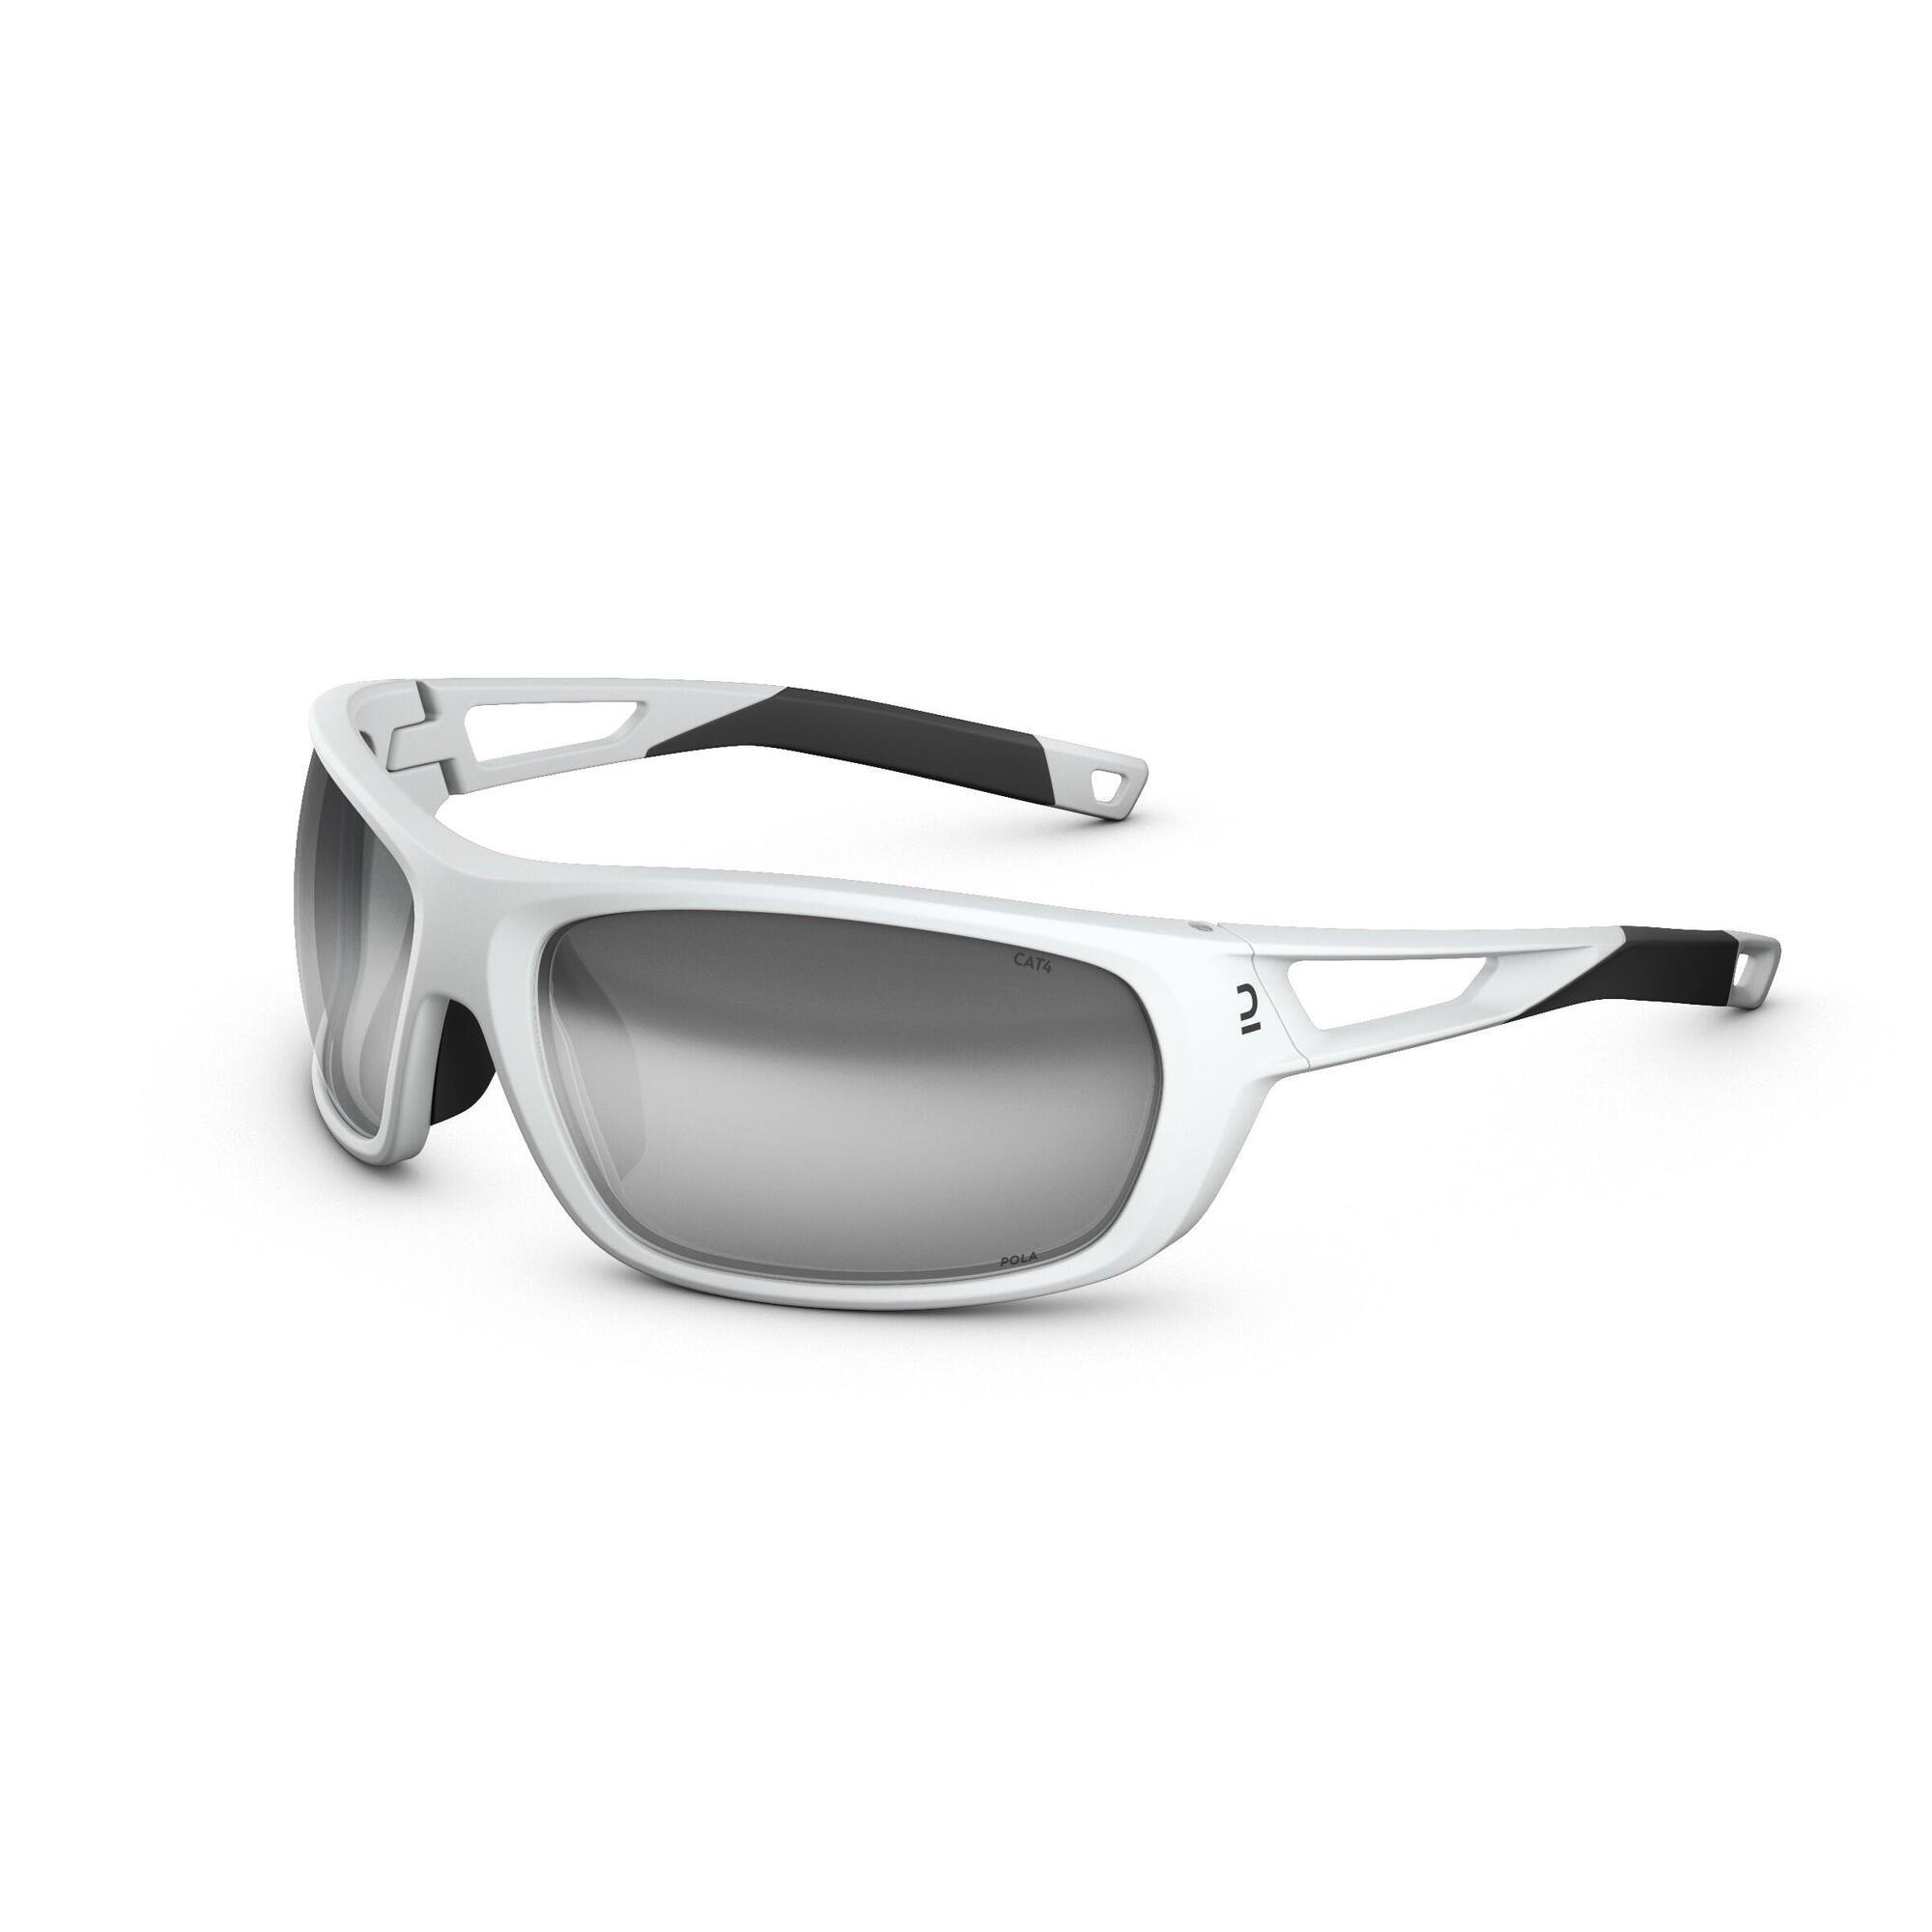 Esterel Cat 4 Lens Sunglasses for Mountain Activities